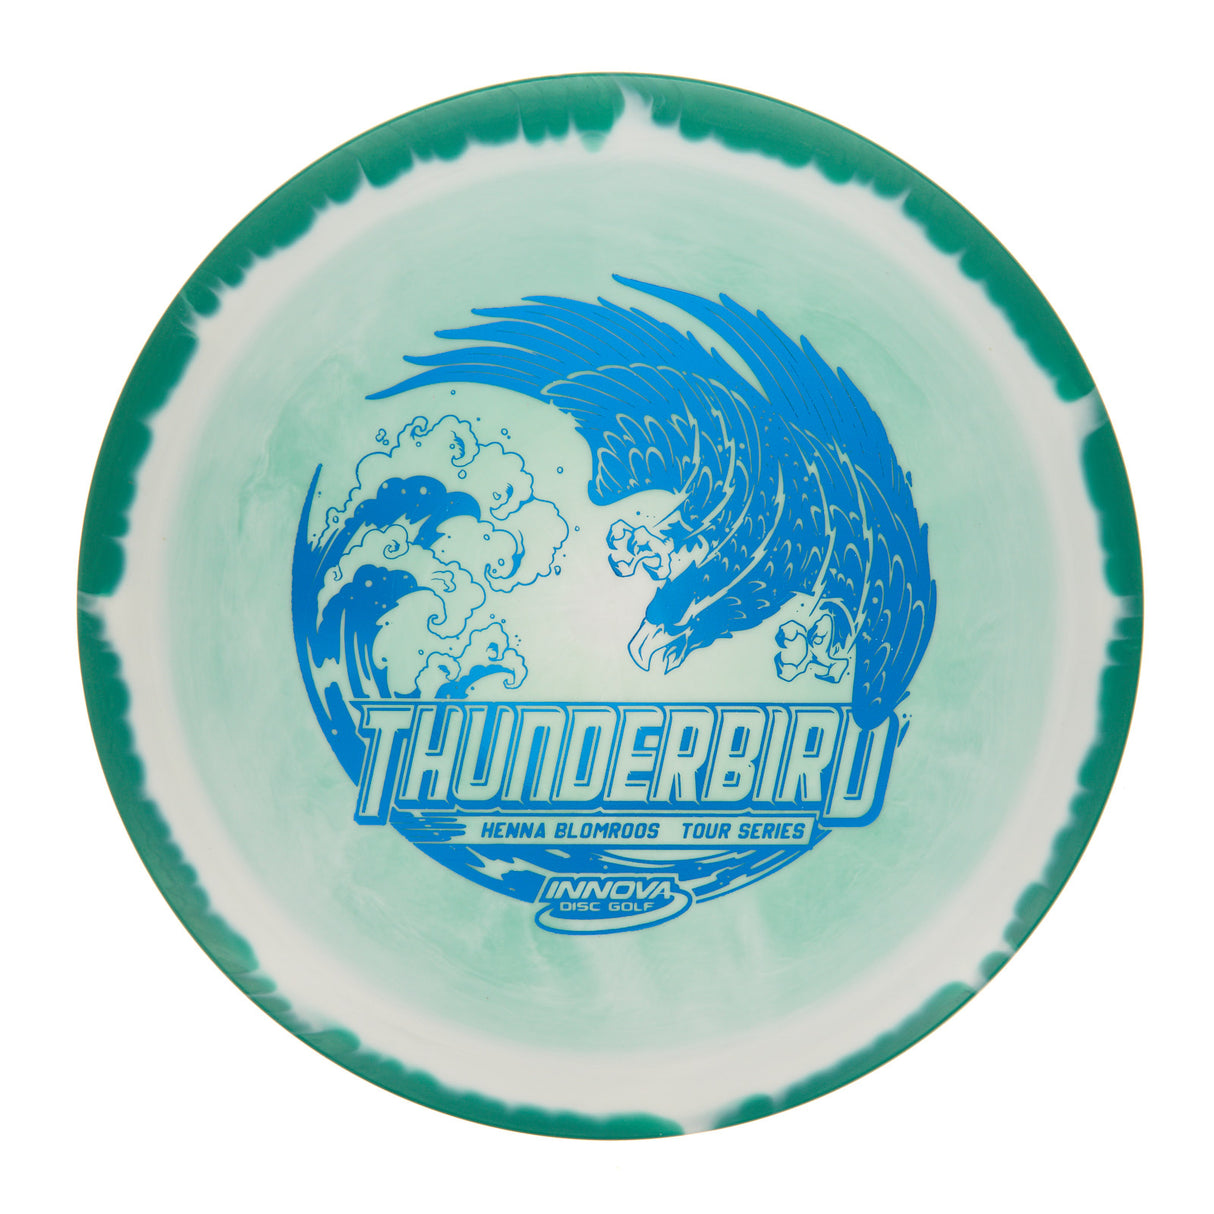 Innova Thunderbird - Henna Blomroos Tour Series Halo Star 175g | Style 0006